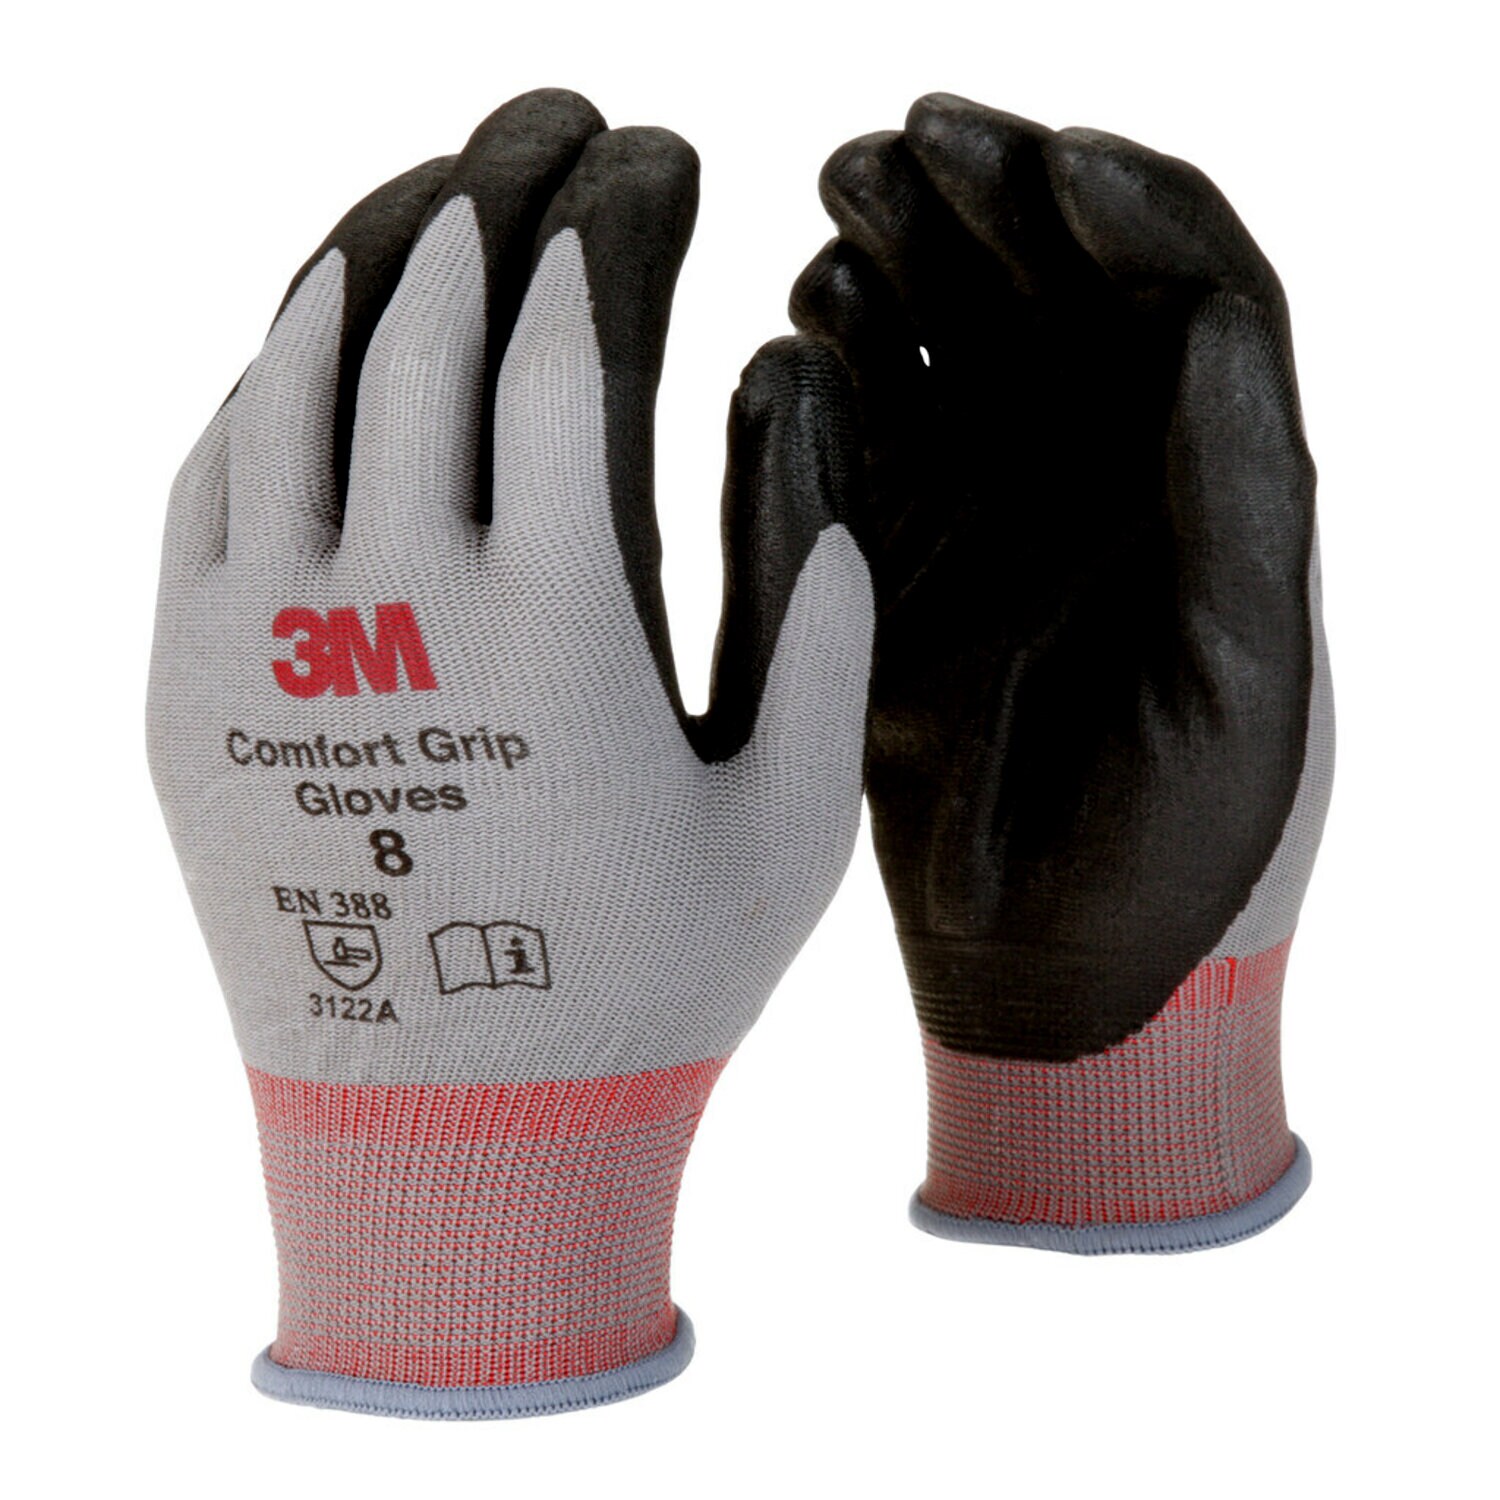 7100034912 - 3M Comfort Grip Glove CGM-GU, General Use, Size M, 120 Pair/Case